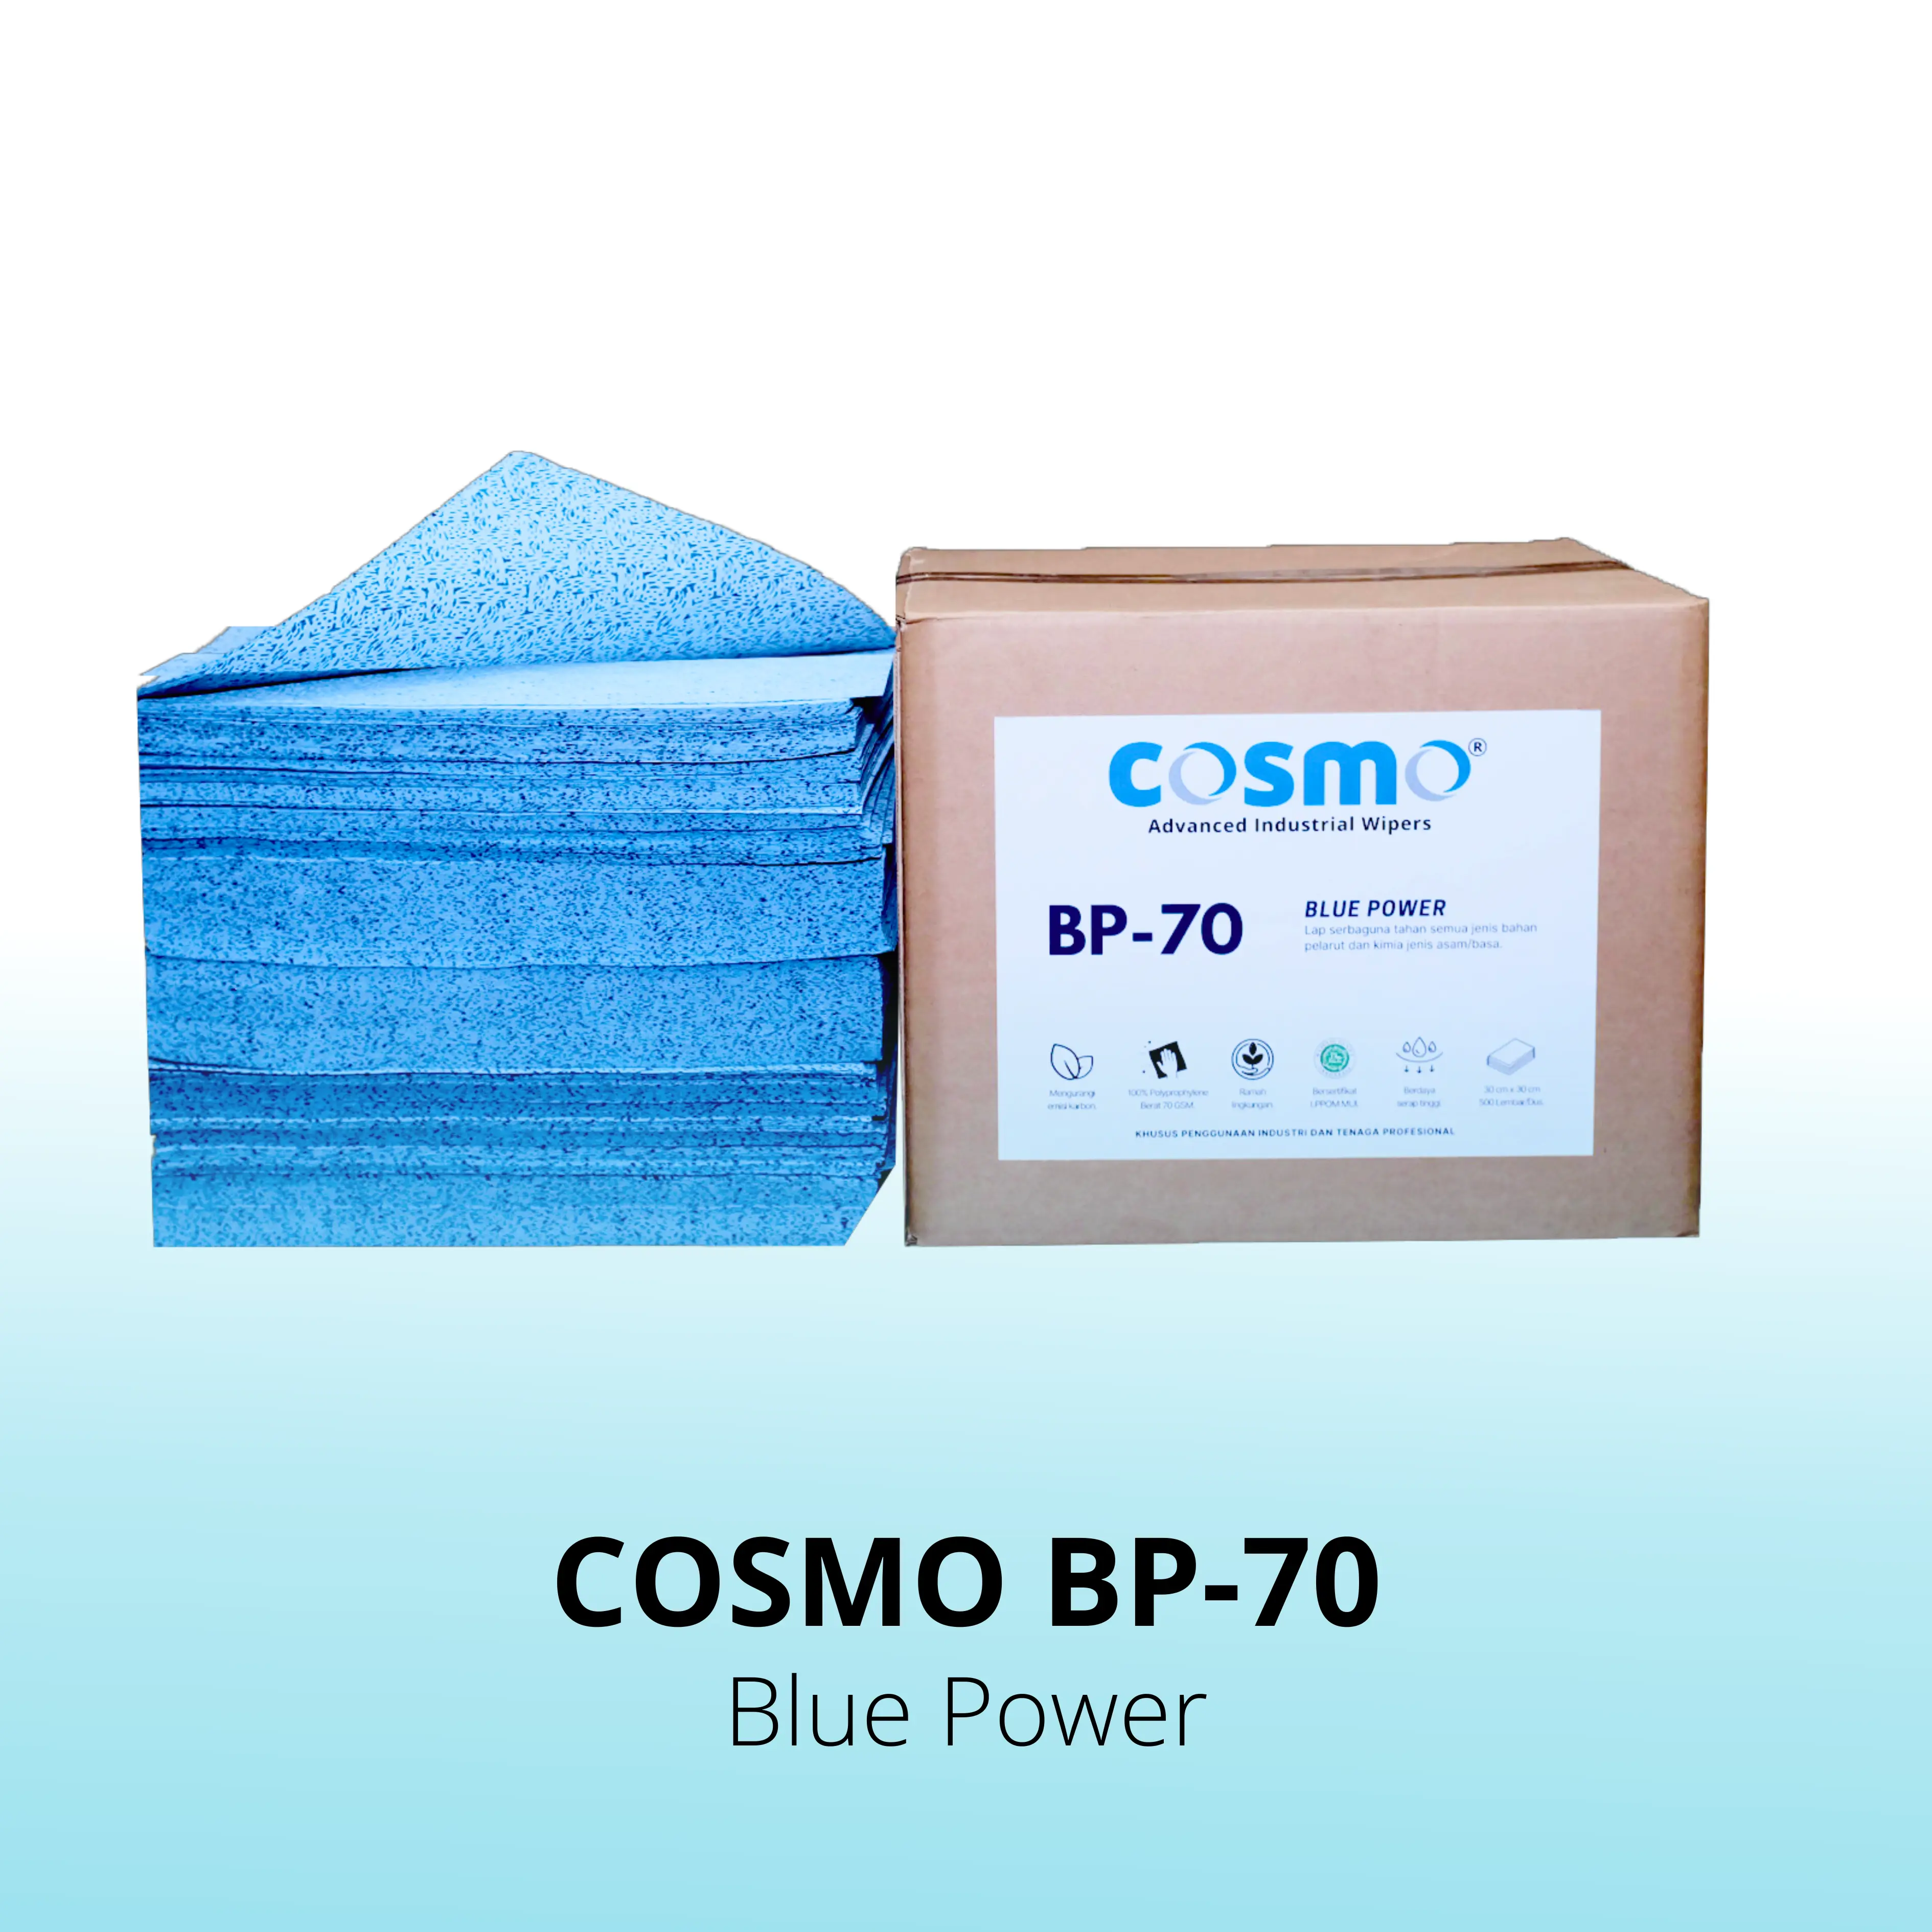 Cosmo BP-70